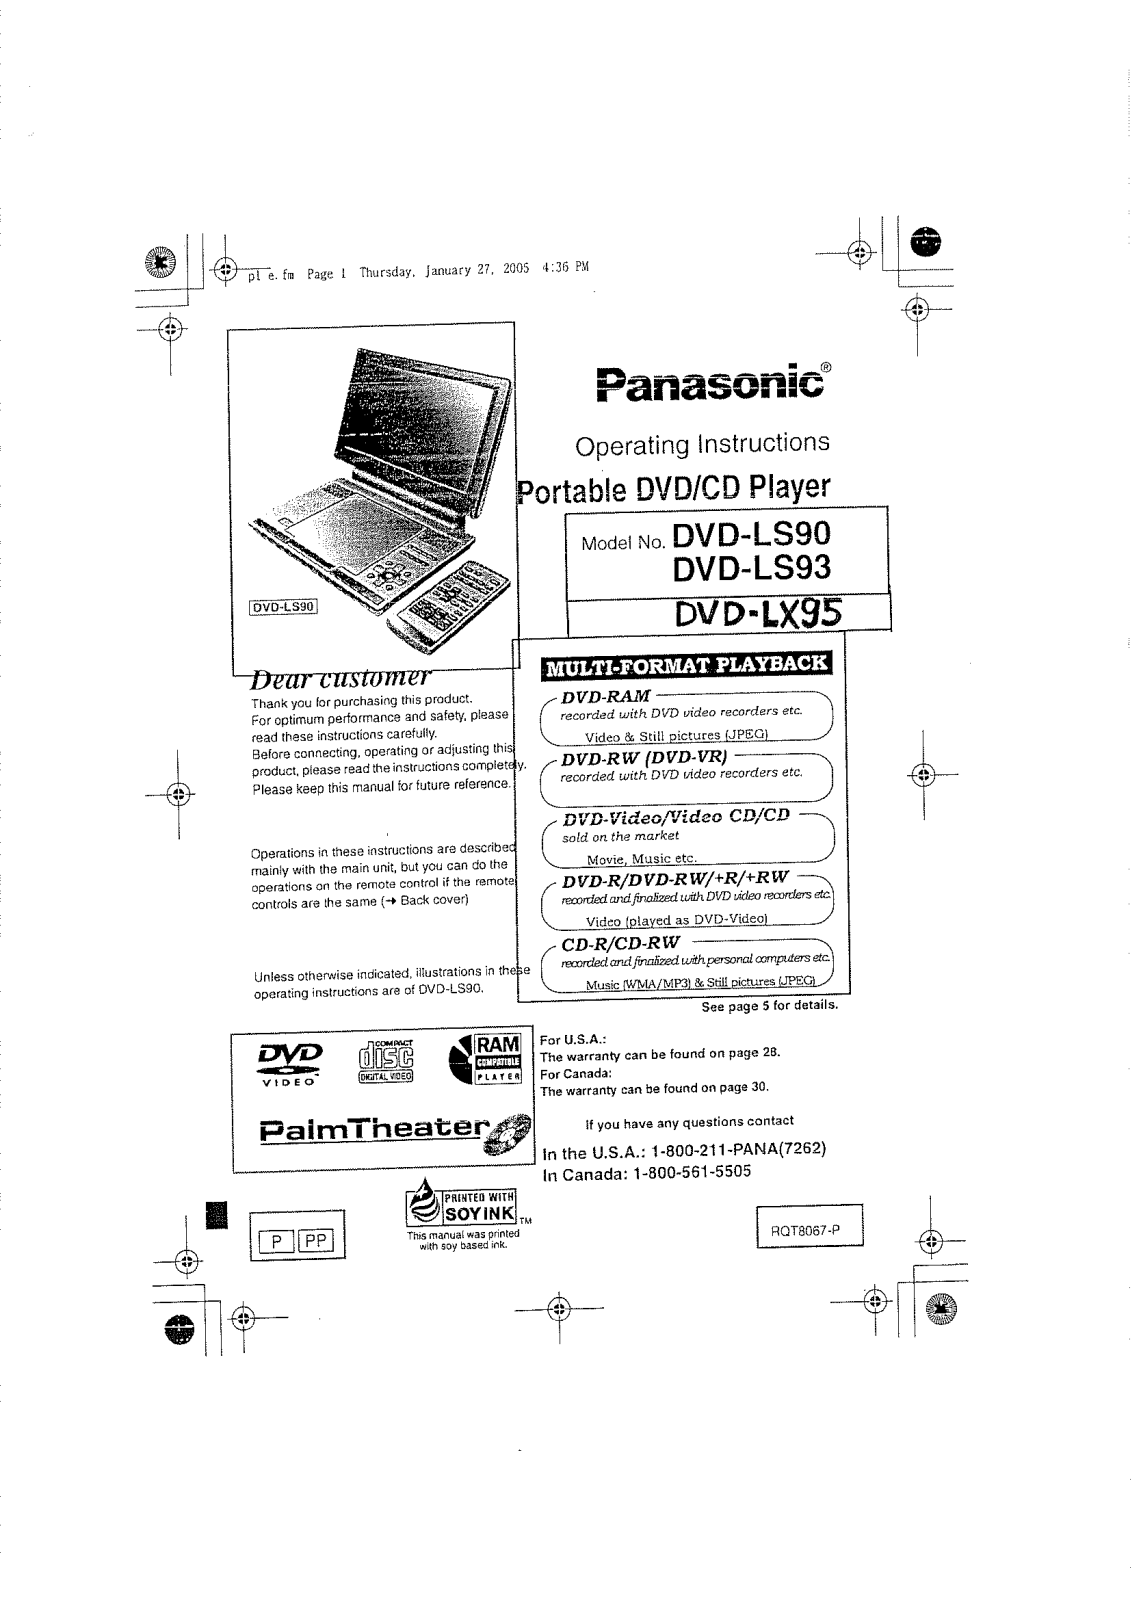 Panasonic DVDLX95 Users Manual